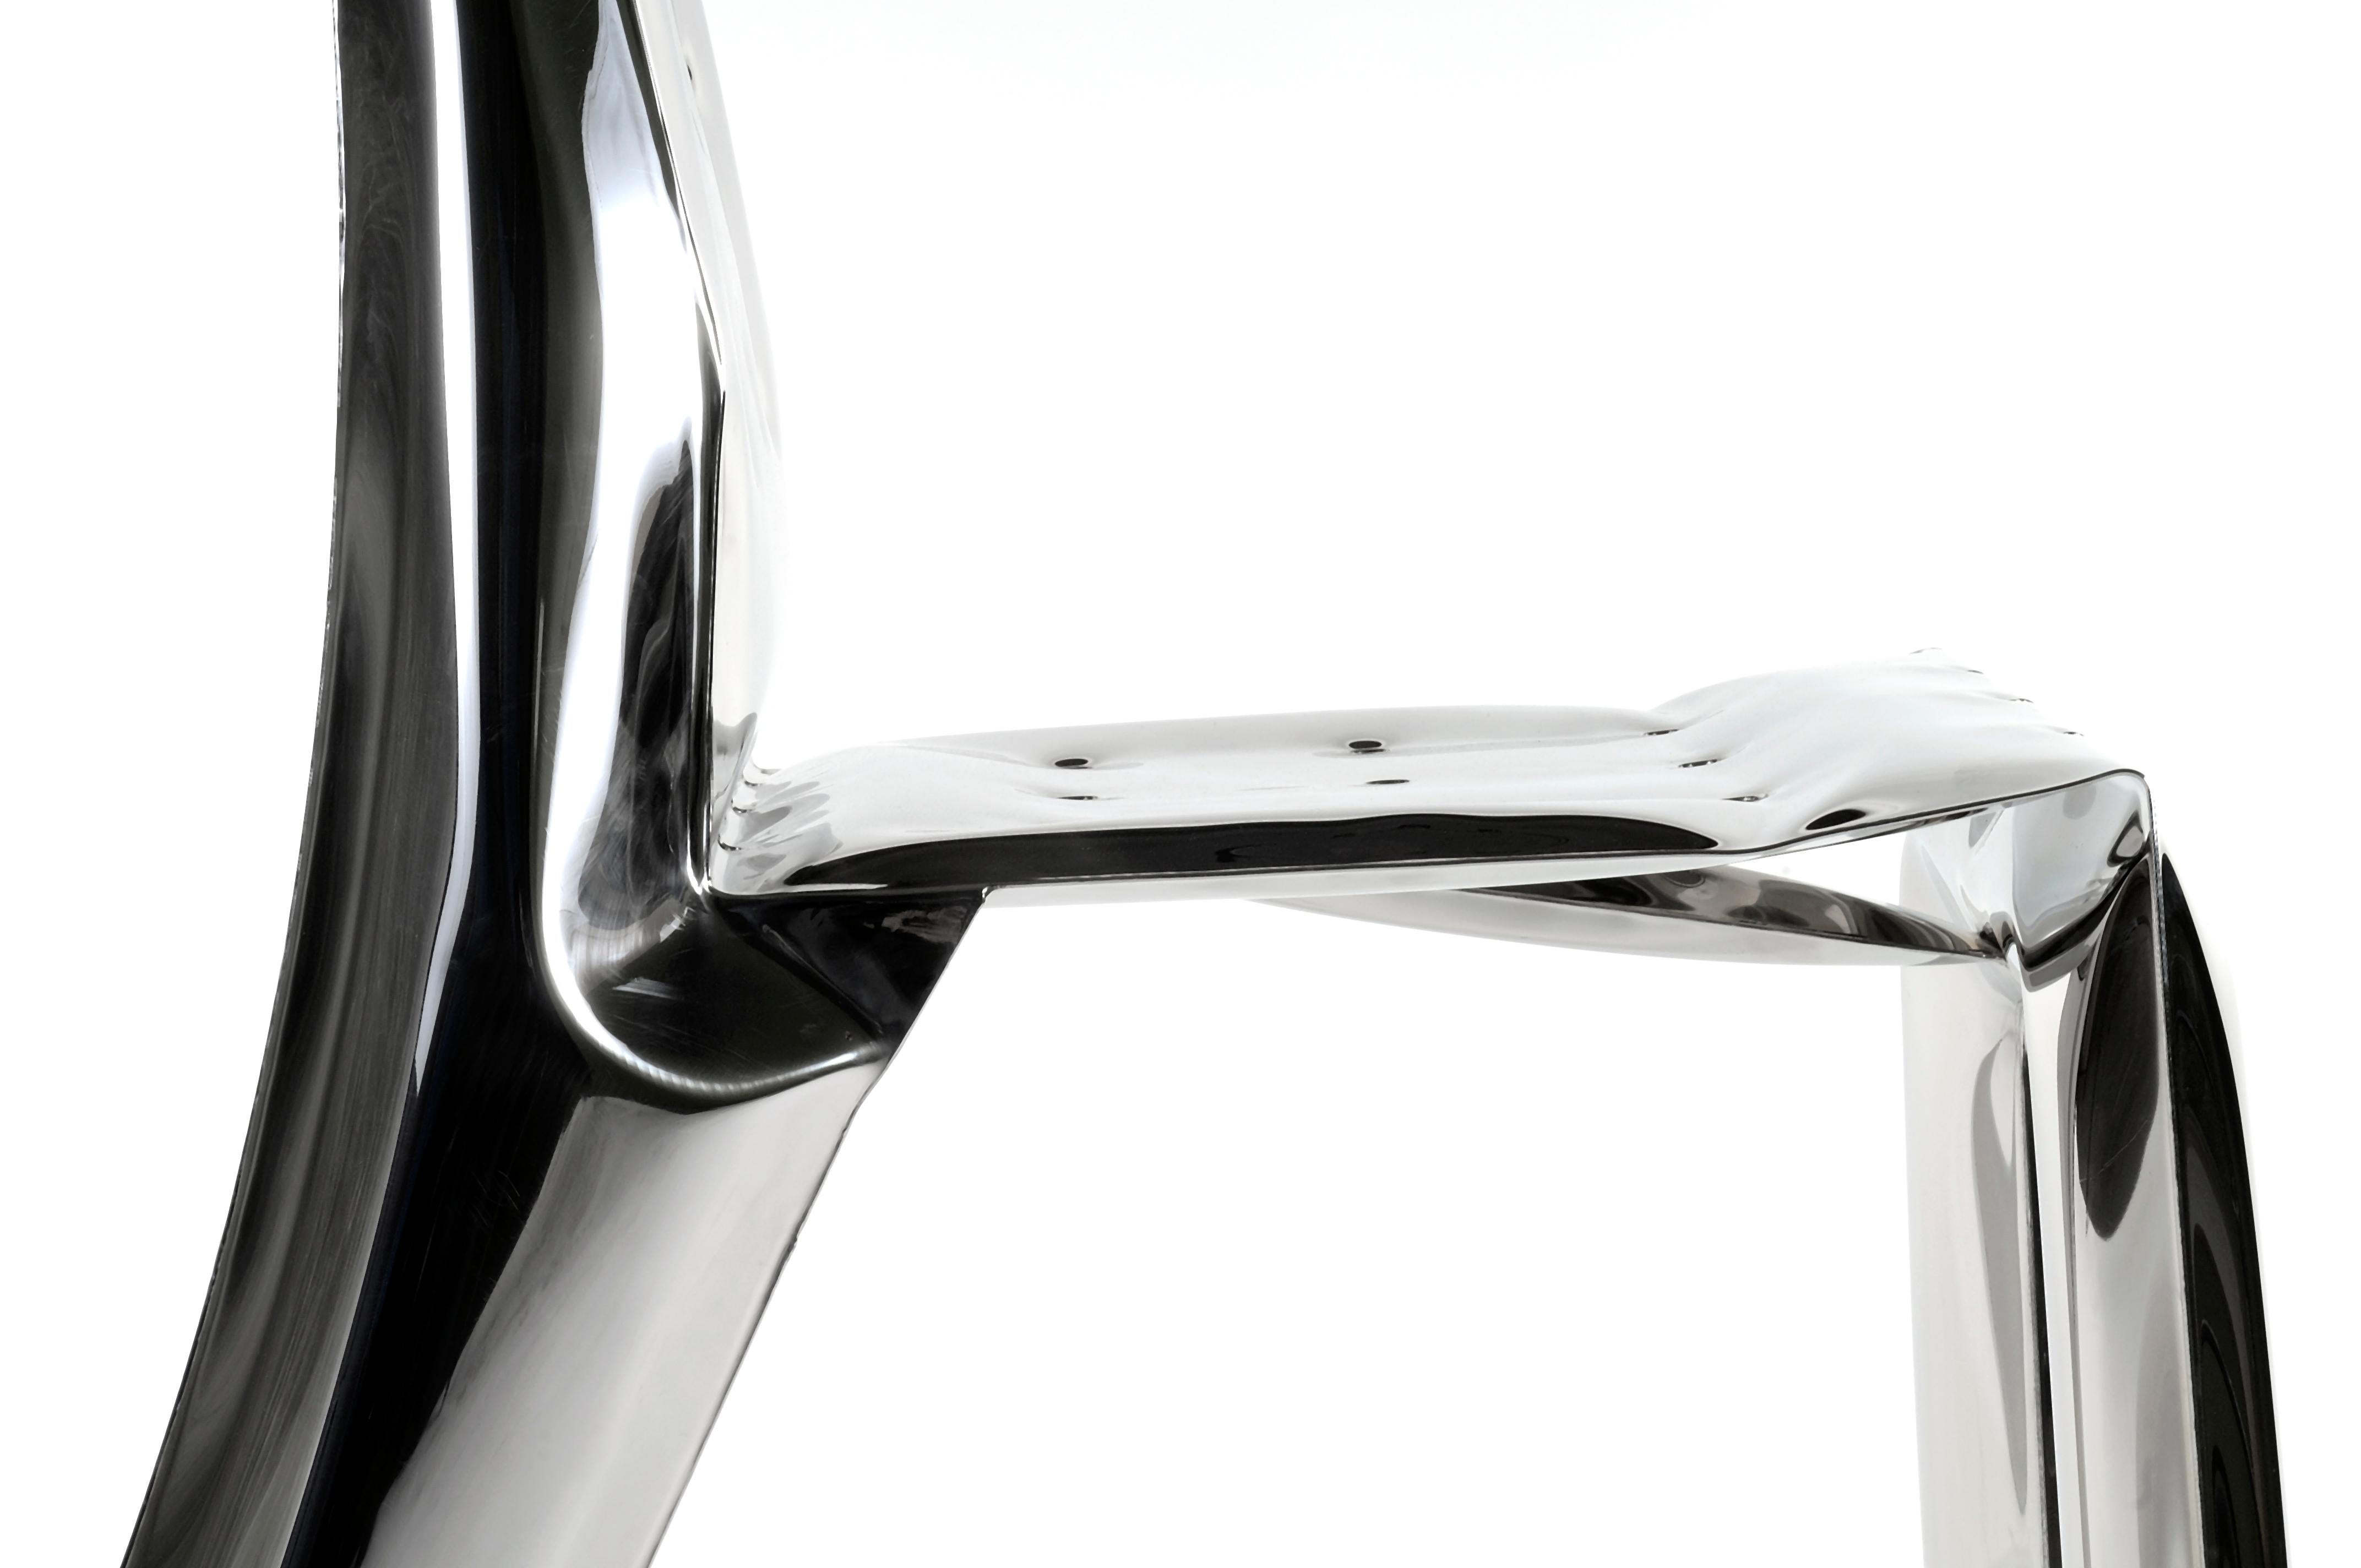 Polish Stainless Steel Chippensteel 0.5 Sculptural Chair by Zieta